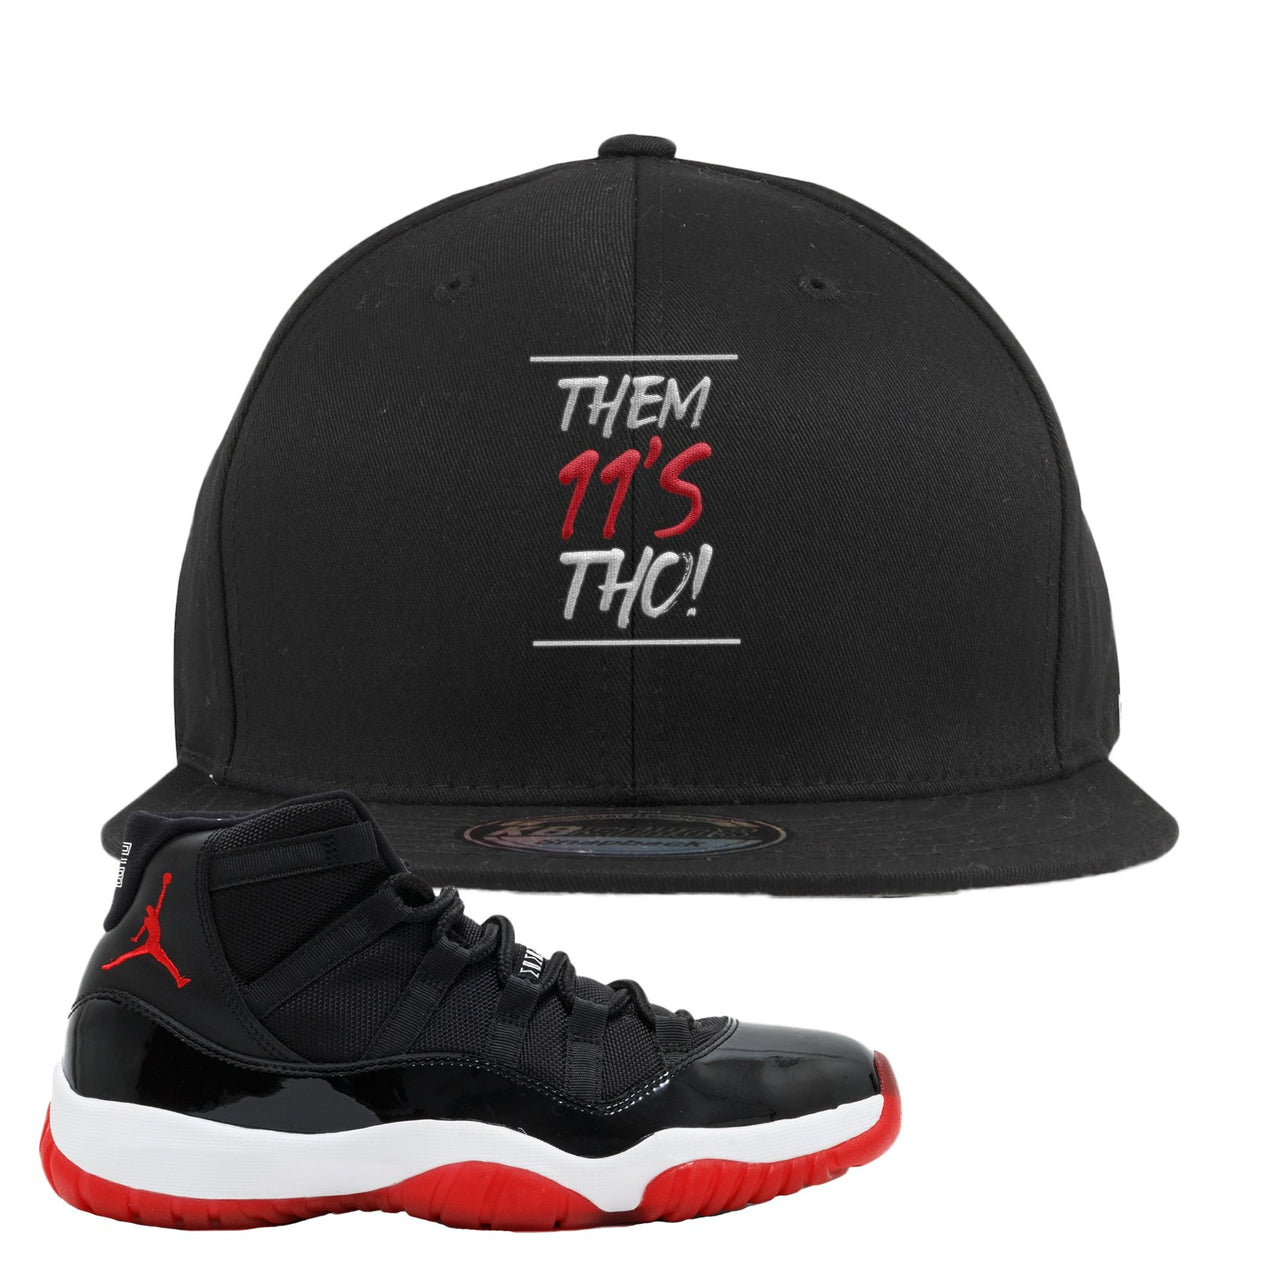 Jordan 11 Bred Them 11s Tho! Black Sneaker Hook Up Snapback Hat